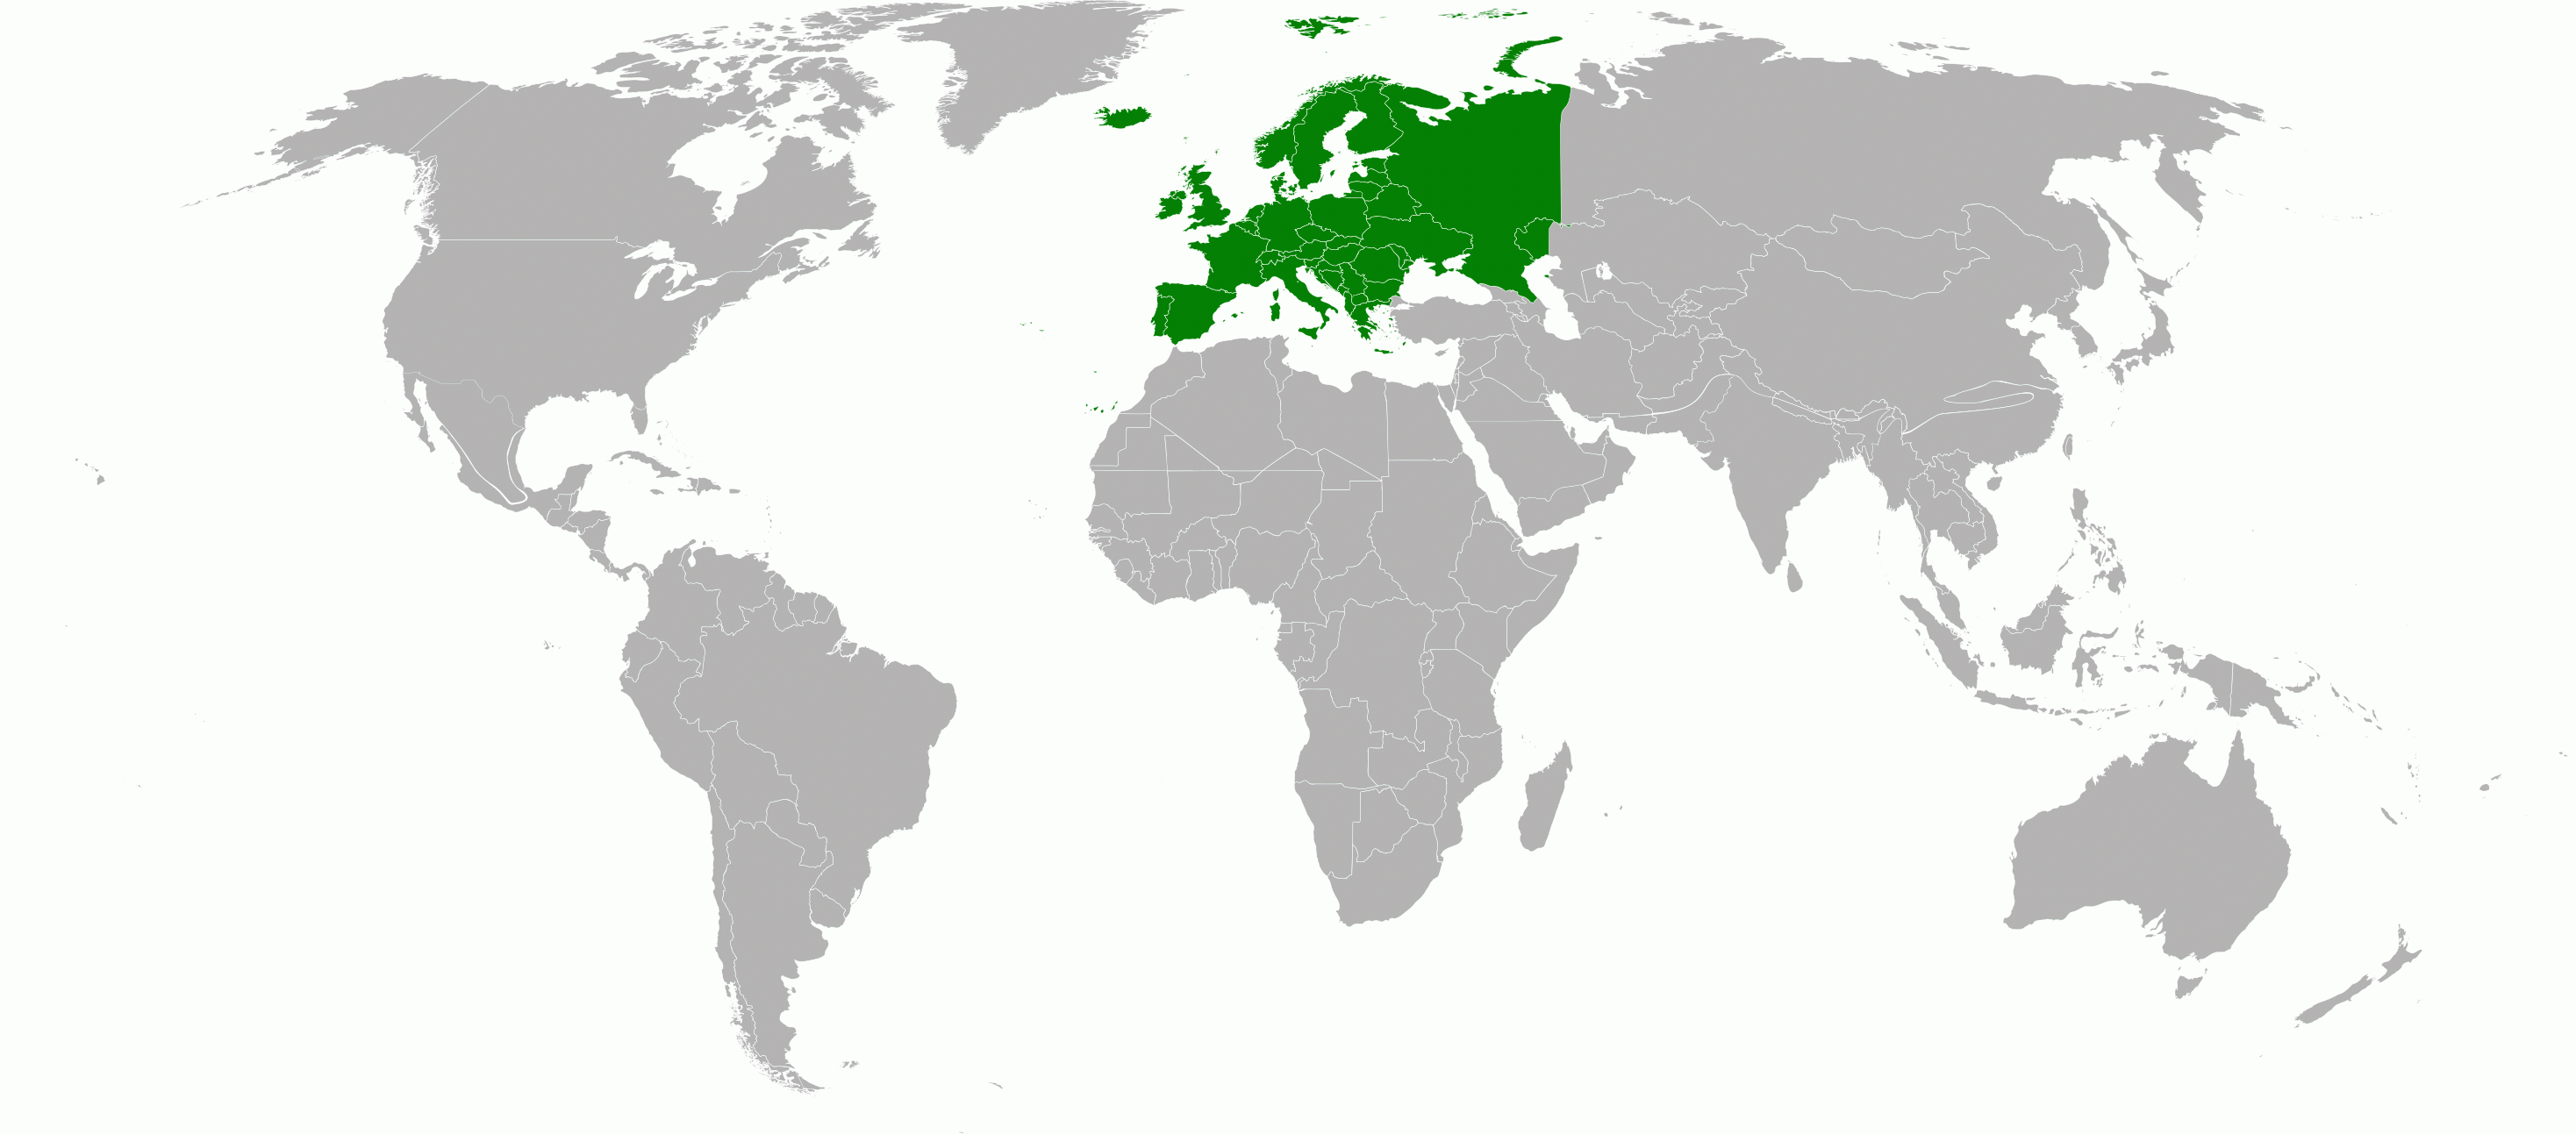 World distribution of Chrysis consanguinea prominea